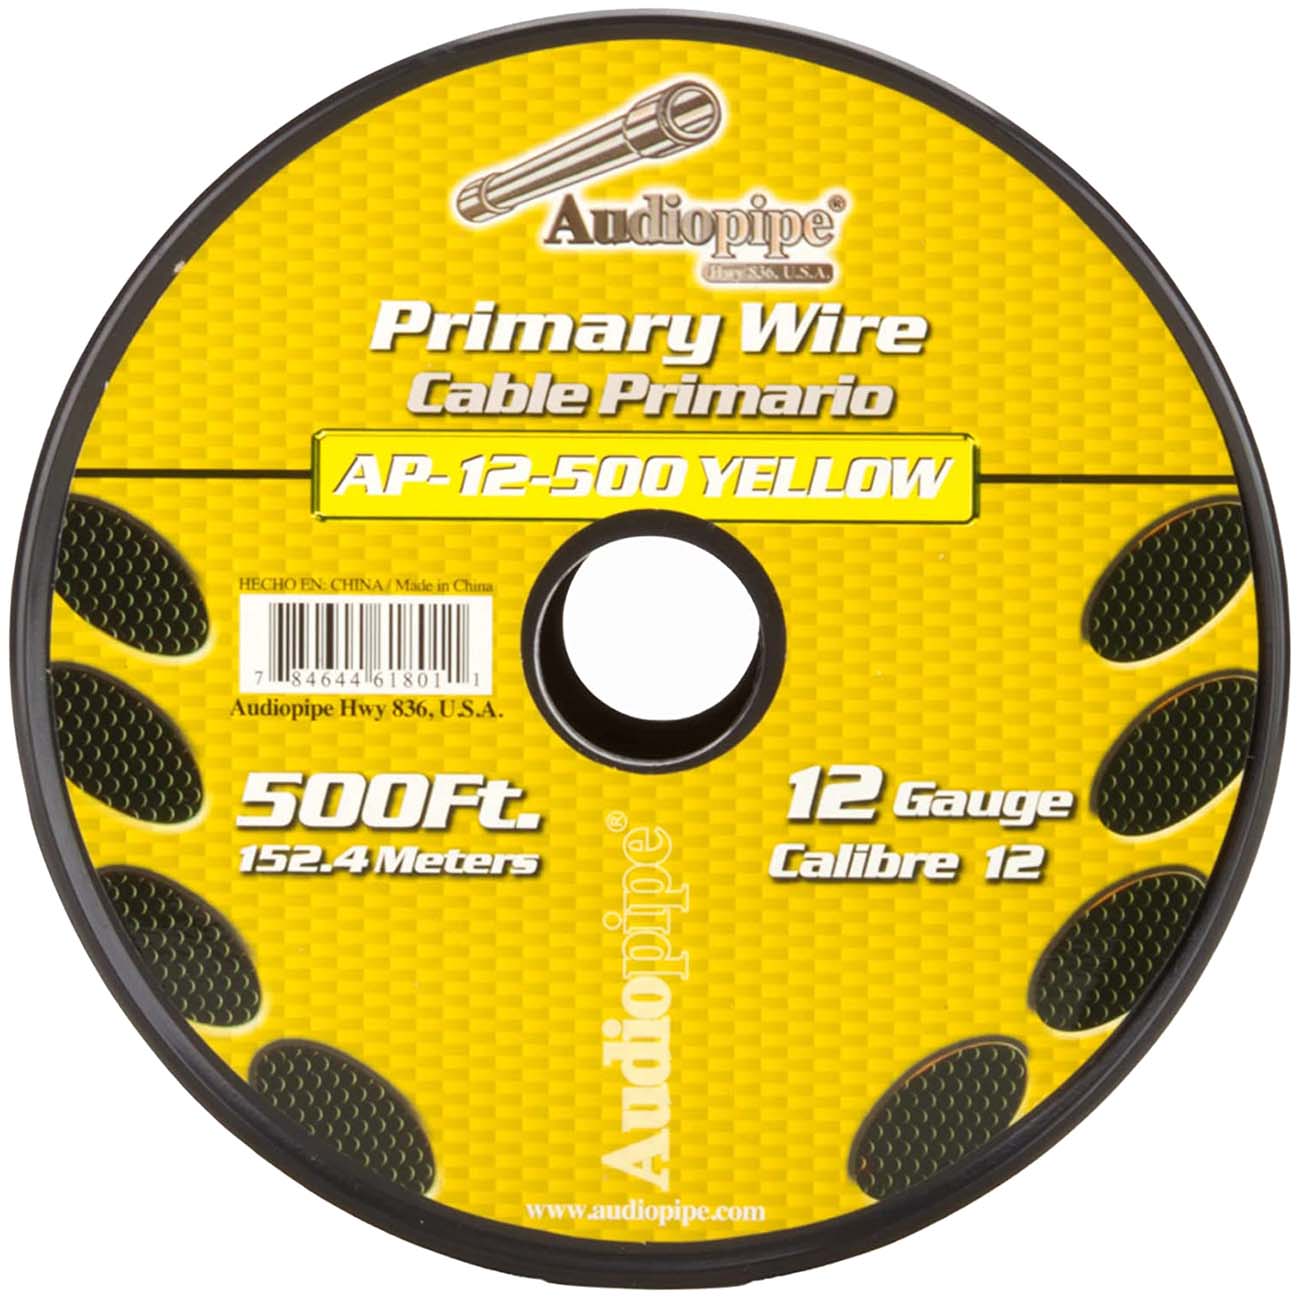 Audiopipe 12 Gauge 500ft Primary Wire Yellow